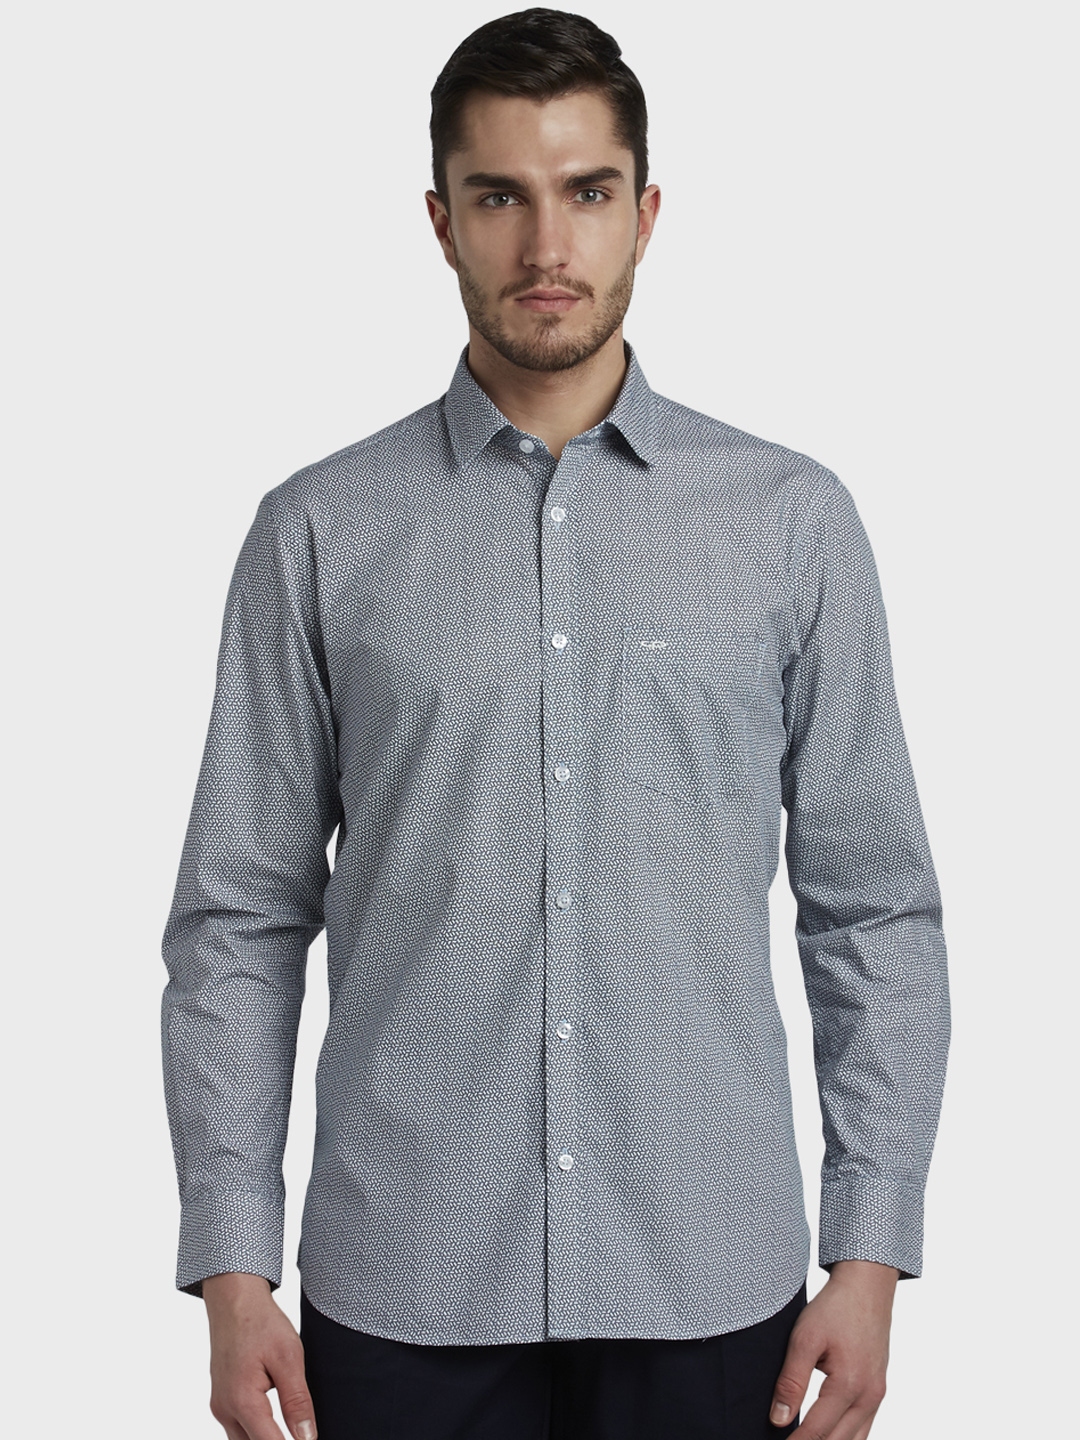 Buy ColorPlus Men Grey & Blue Tailored Fit Printed Casual Shirt ...